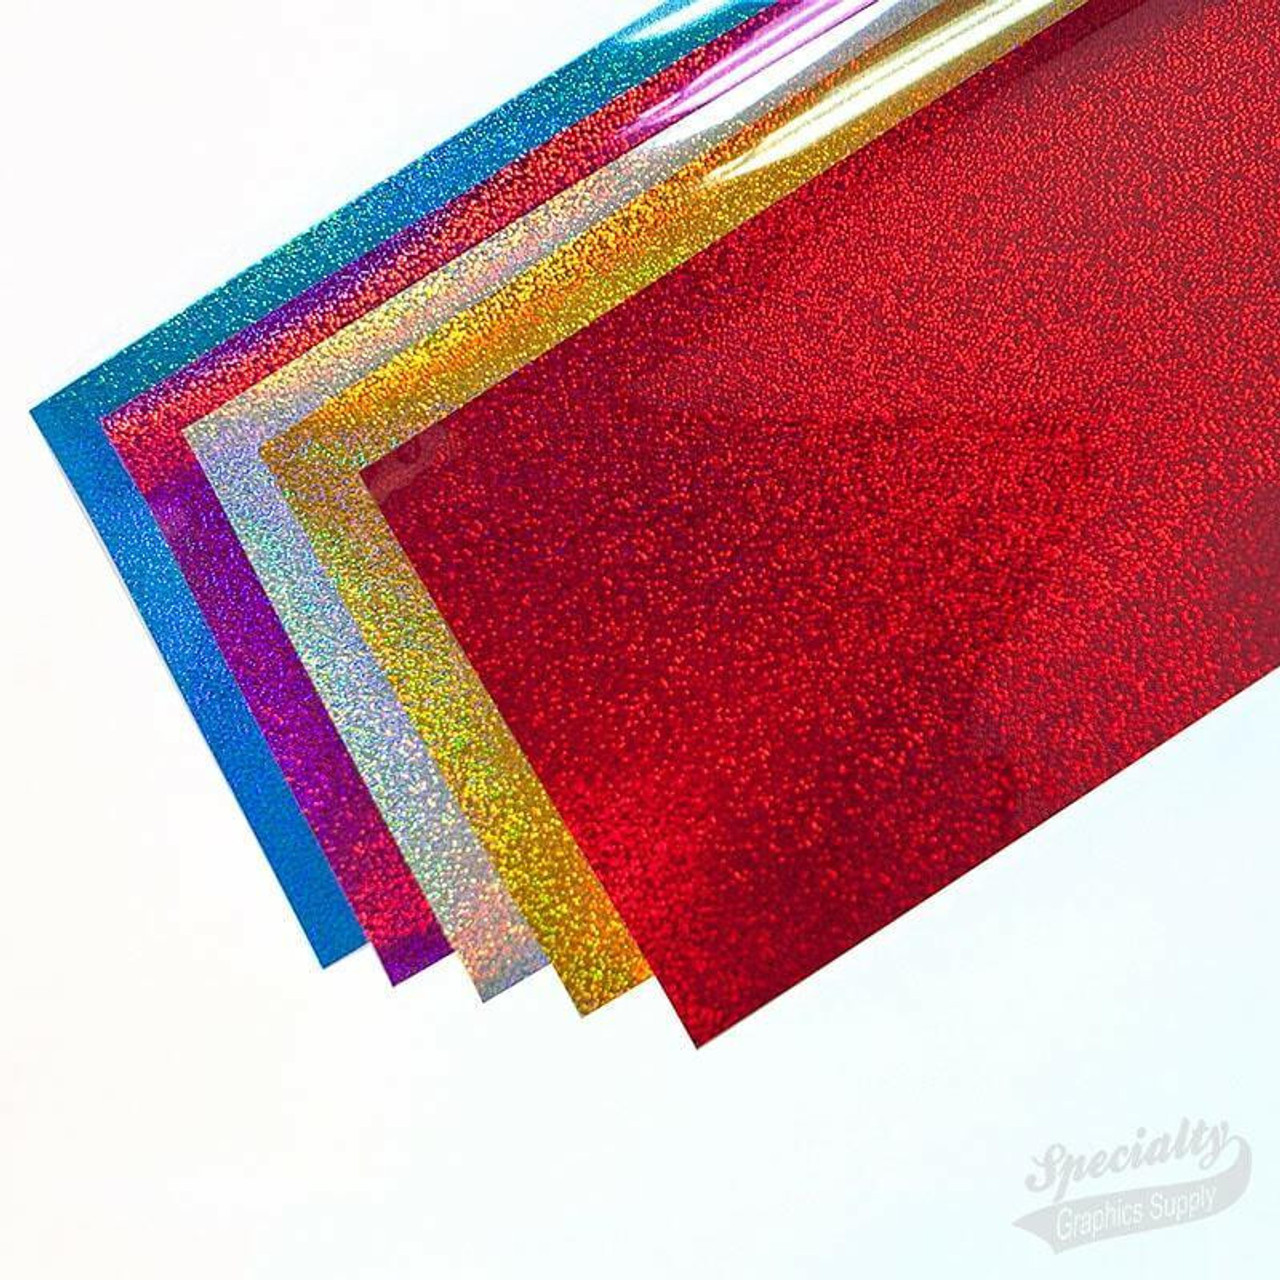 Siser (Holographic Red) Heat Transfer Vinyl 12 x 20 Sheet